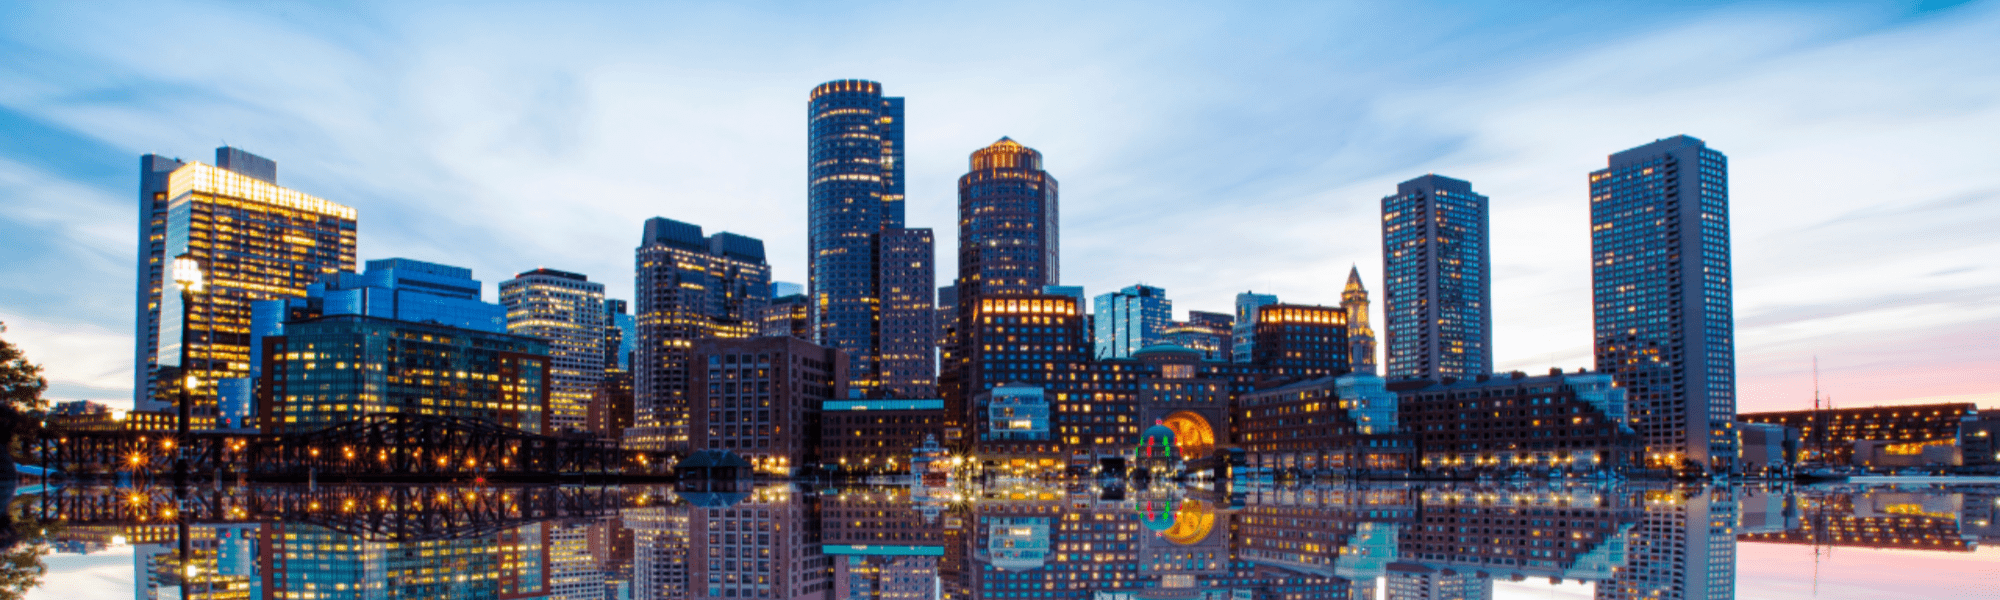 Boston skyline banner image 